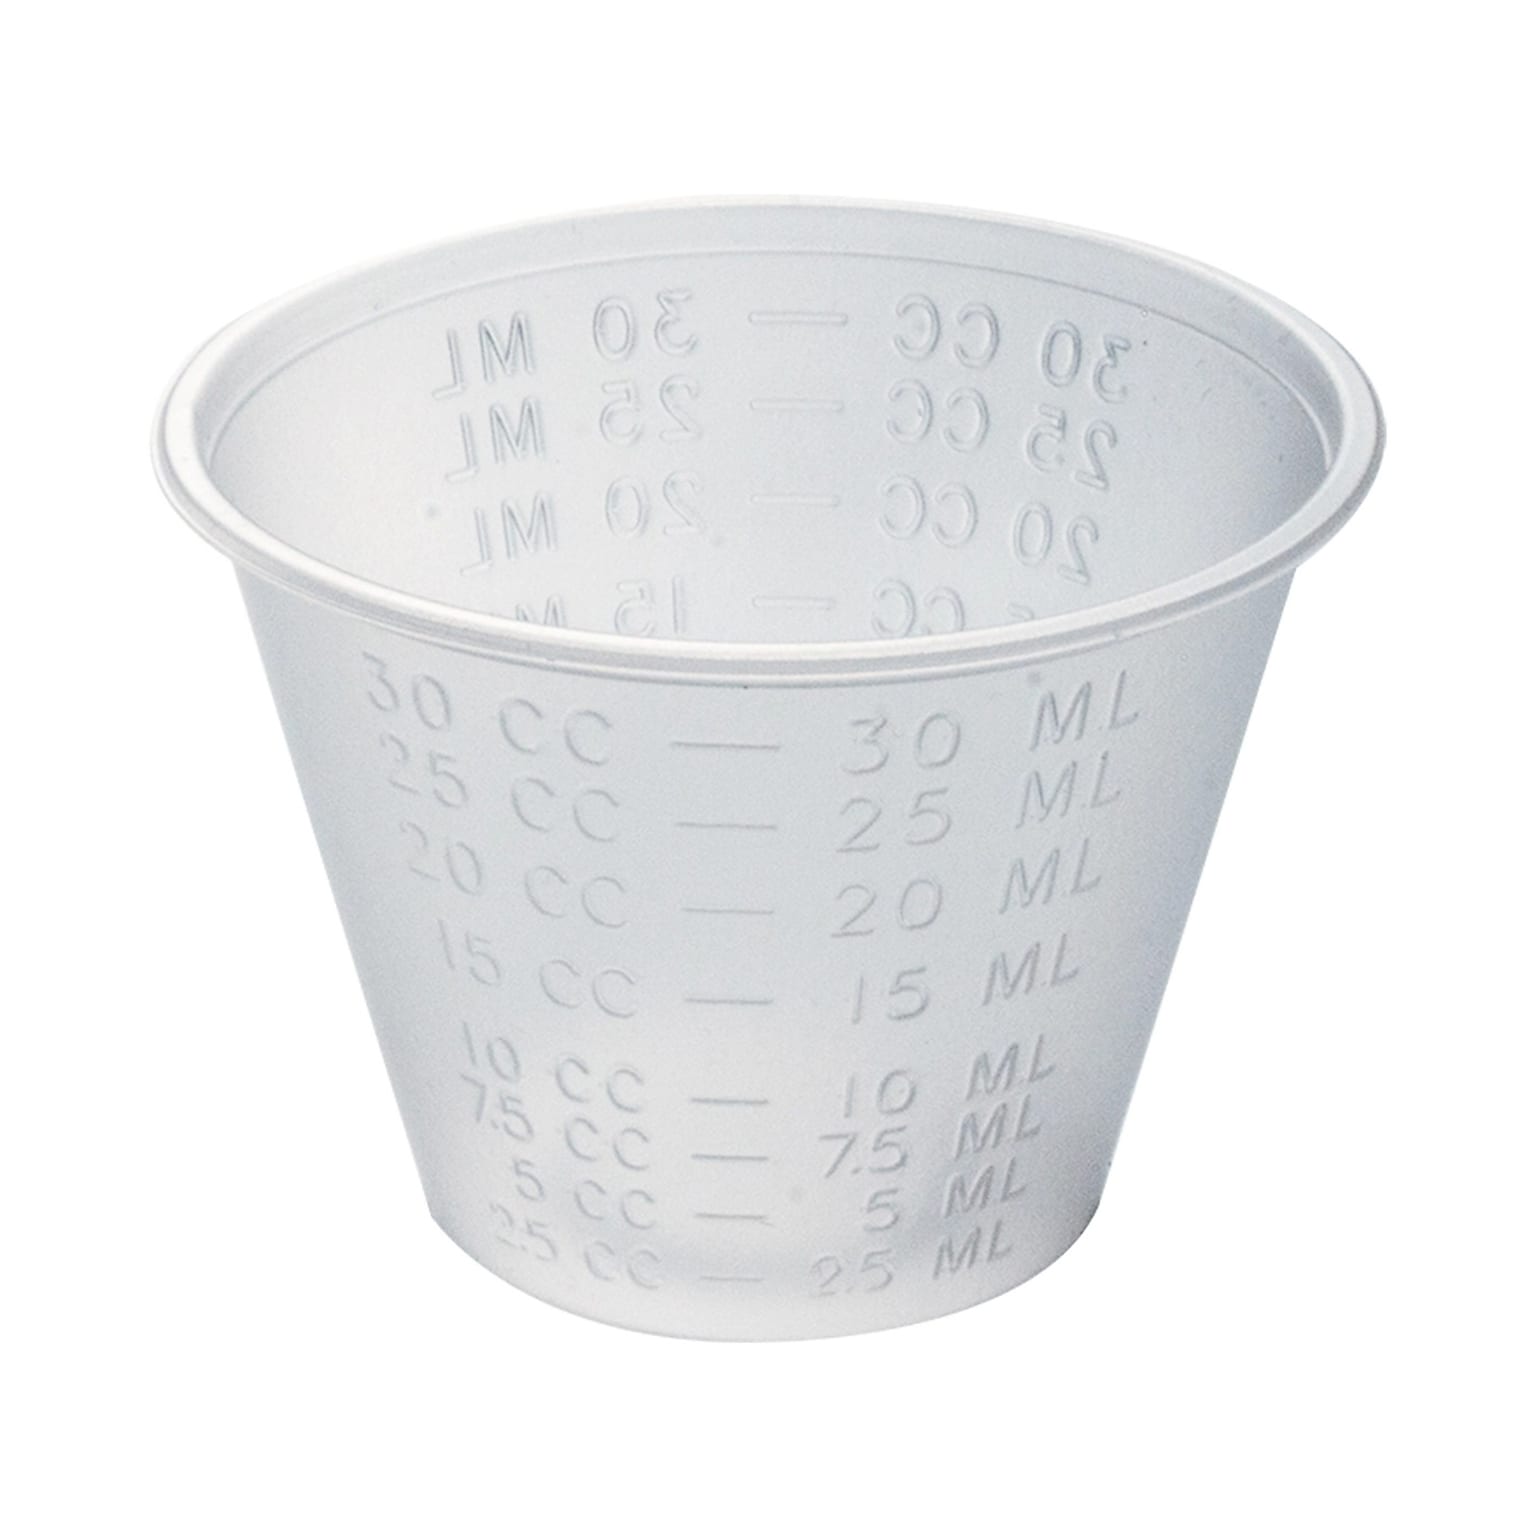 Dynarex 1 oz. Plastic Disposable Medicine Cup, Clear, 100/Pack, 50 Packs/Carton (4258)